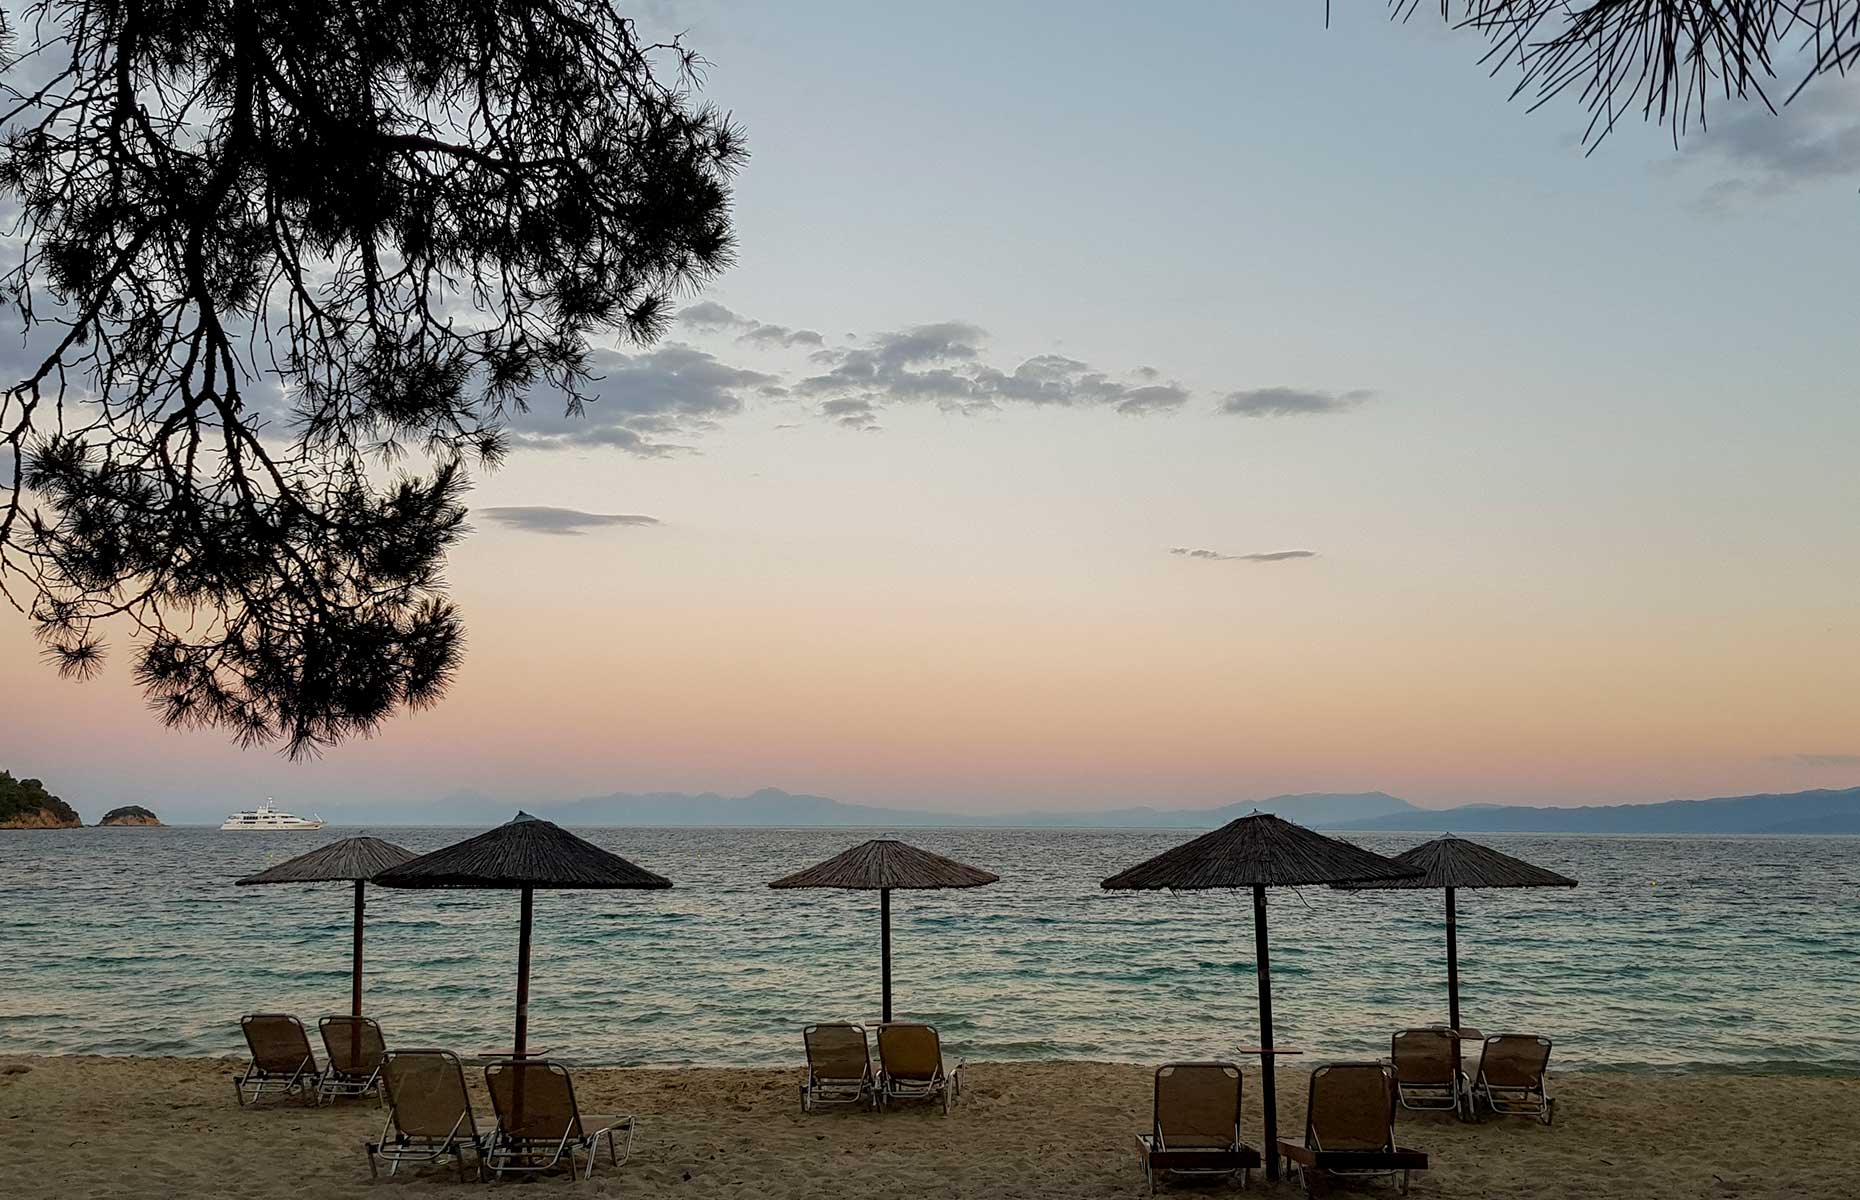 Koukounaries beach, Skiathos, Greece in June 2020. (Image: Athanasios Gioumpasis/Getty Images)